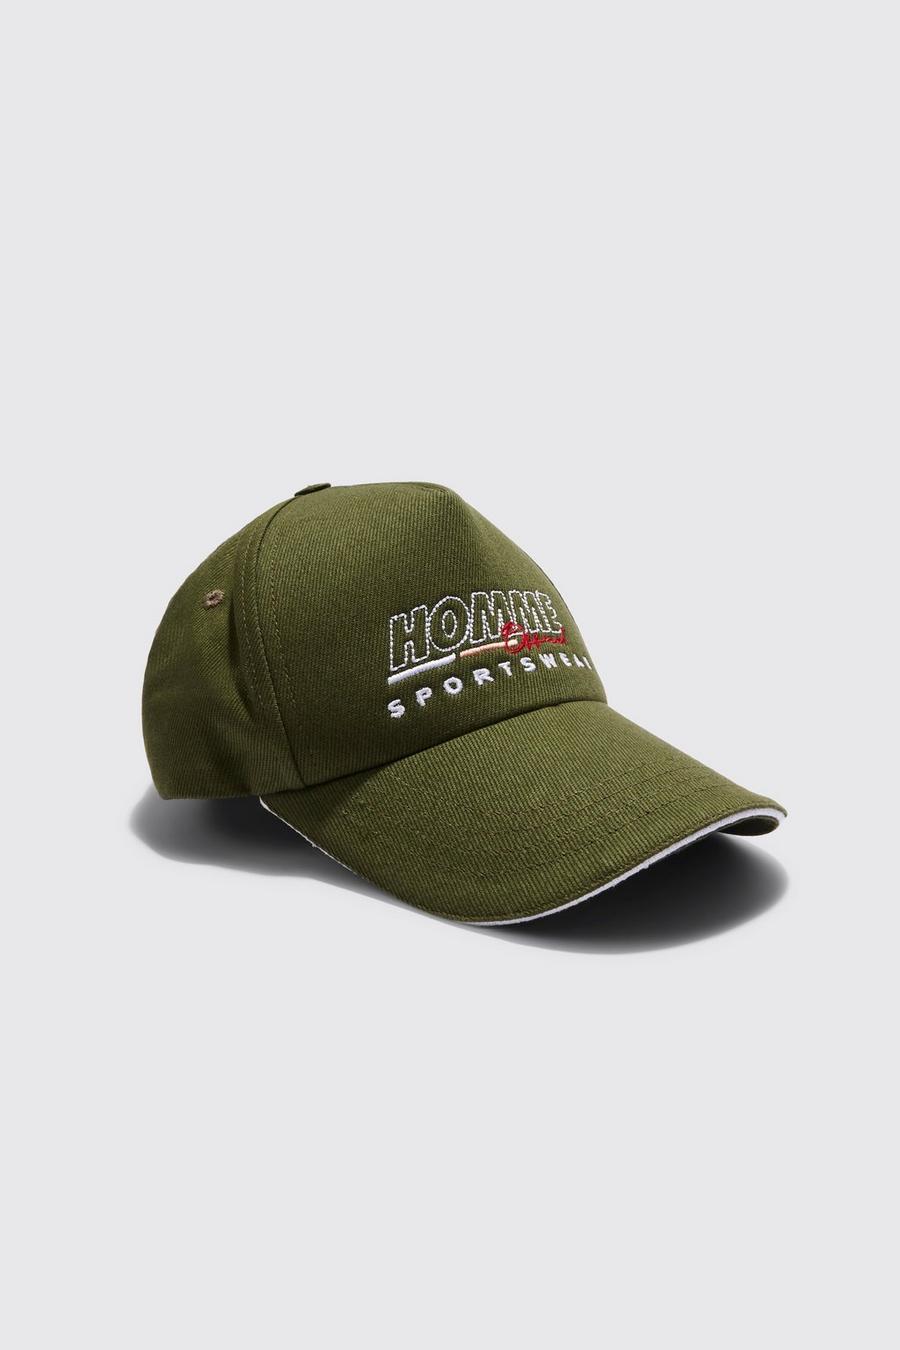 Forest vert Homme Sportwear Embroidered Cap